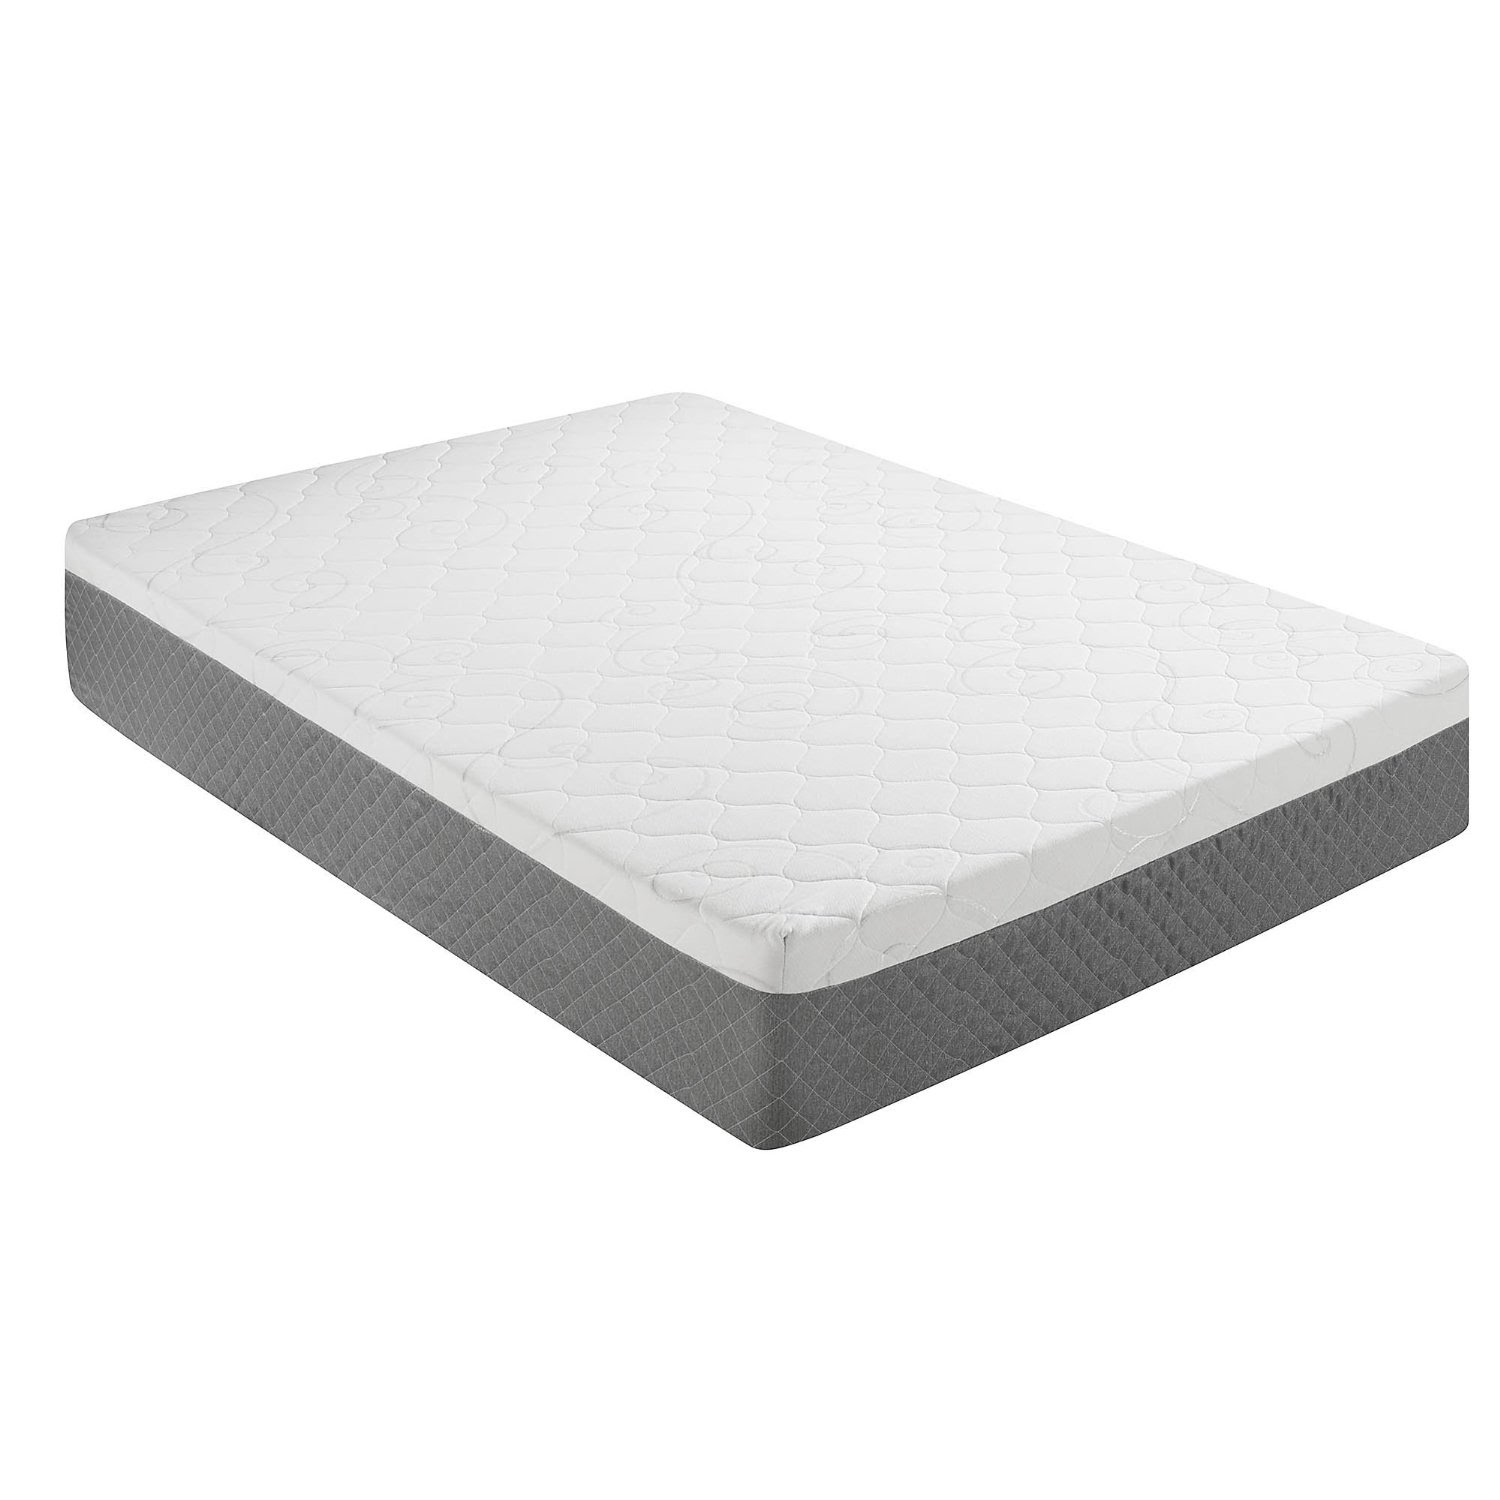 Sleep Innovations 12-Inch Gel Swirl Memory Foam Mattress review